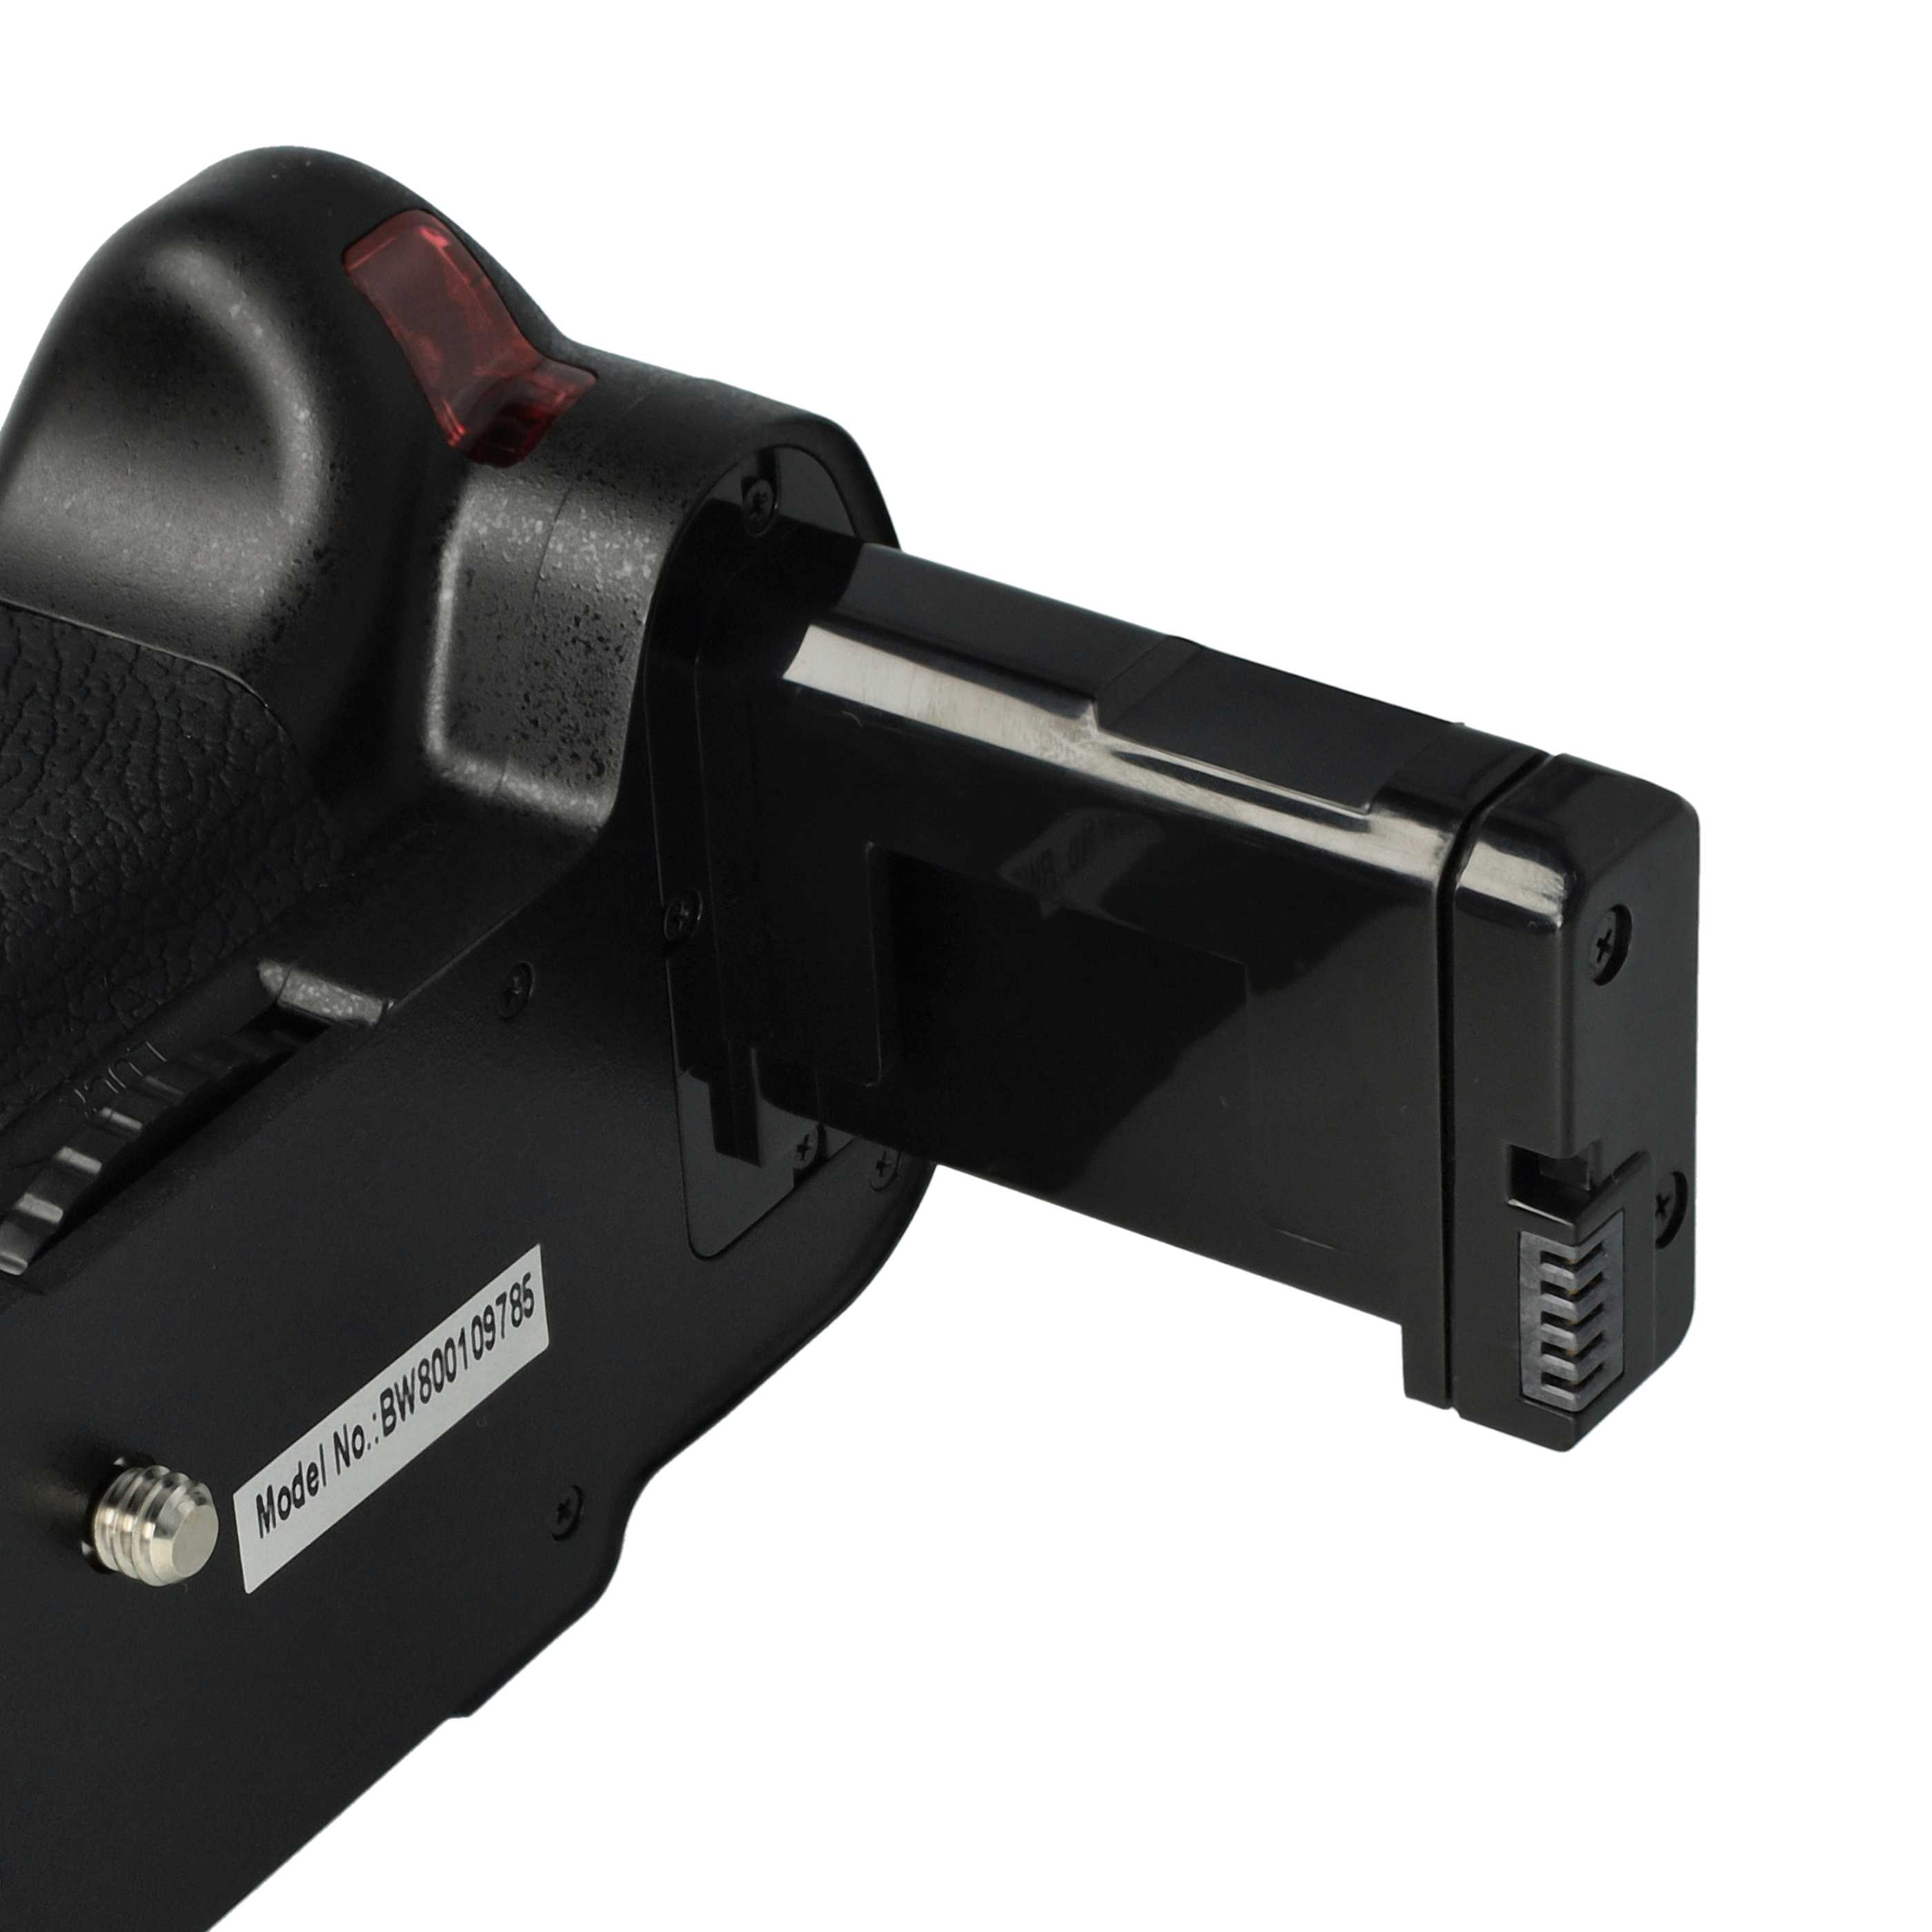 Impugnatura battery grip per camera Nikon D5100, D5200, D5300 - incl. ghiera, incl. pulsante scatto 